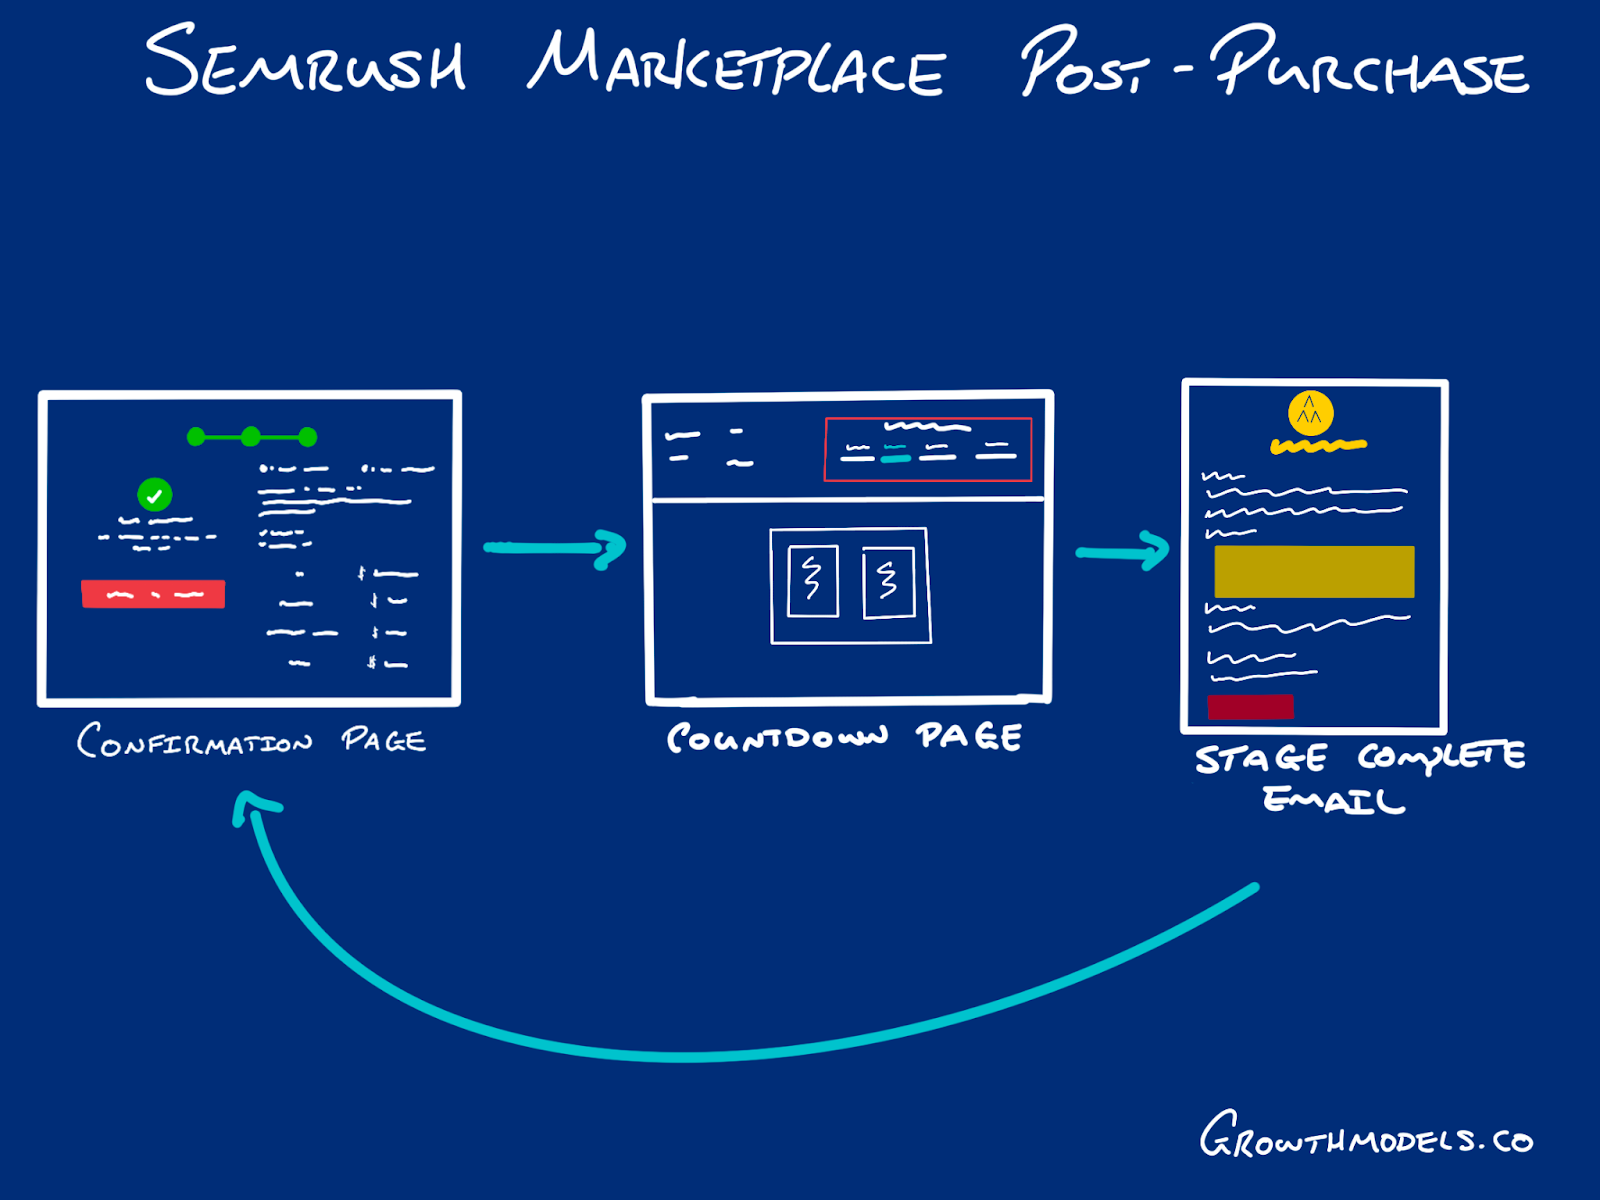 SEMRush Marketplace post purchase growth model